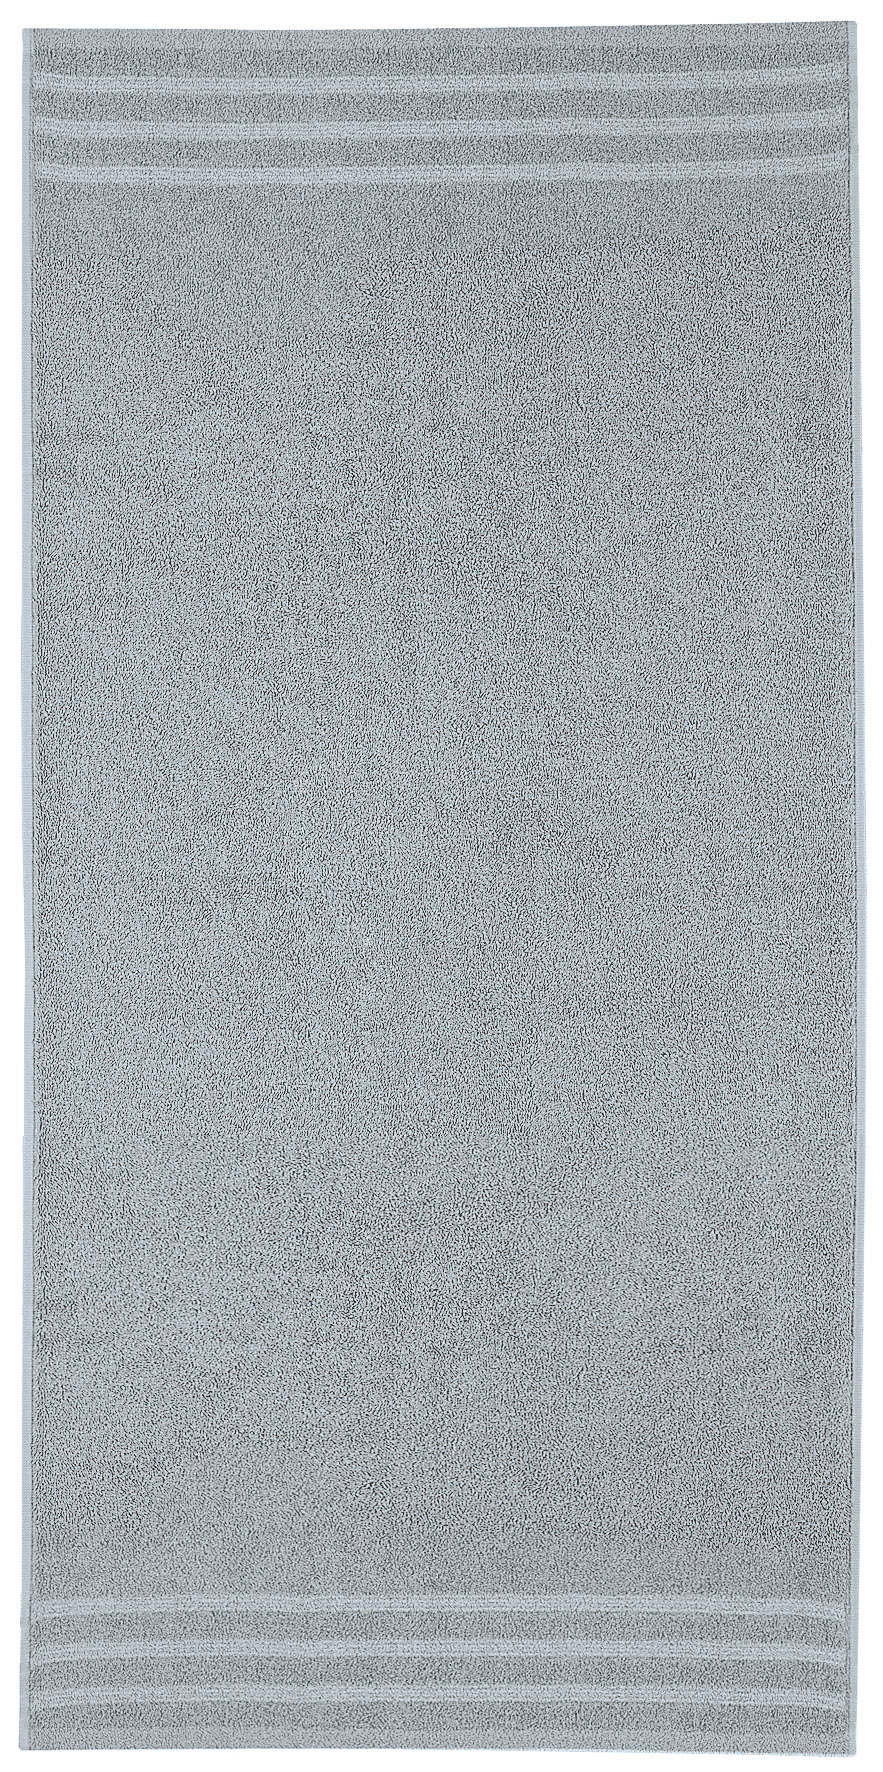 Handtuch, Royal Platin, 50x100 cm